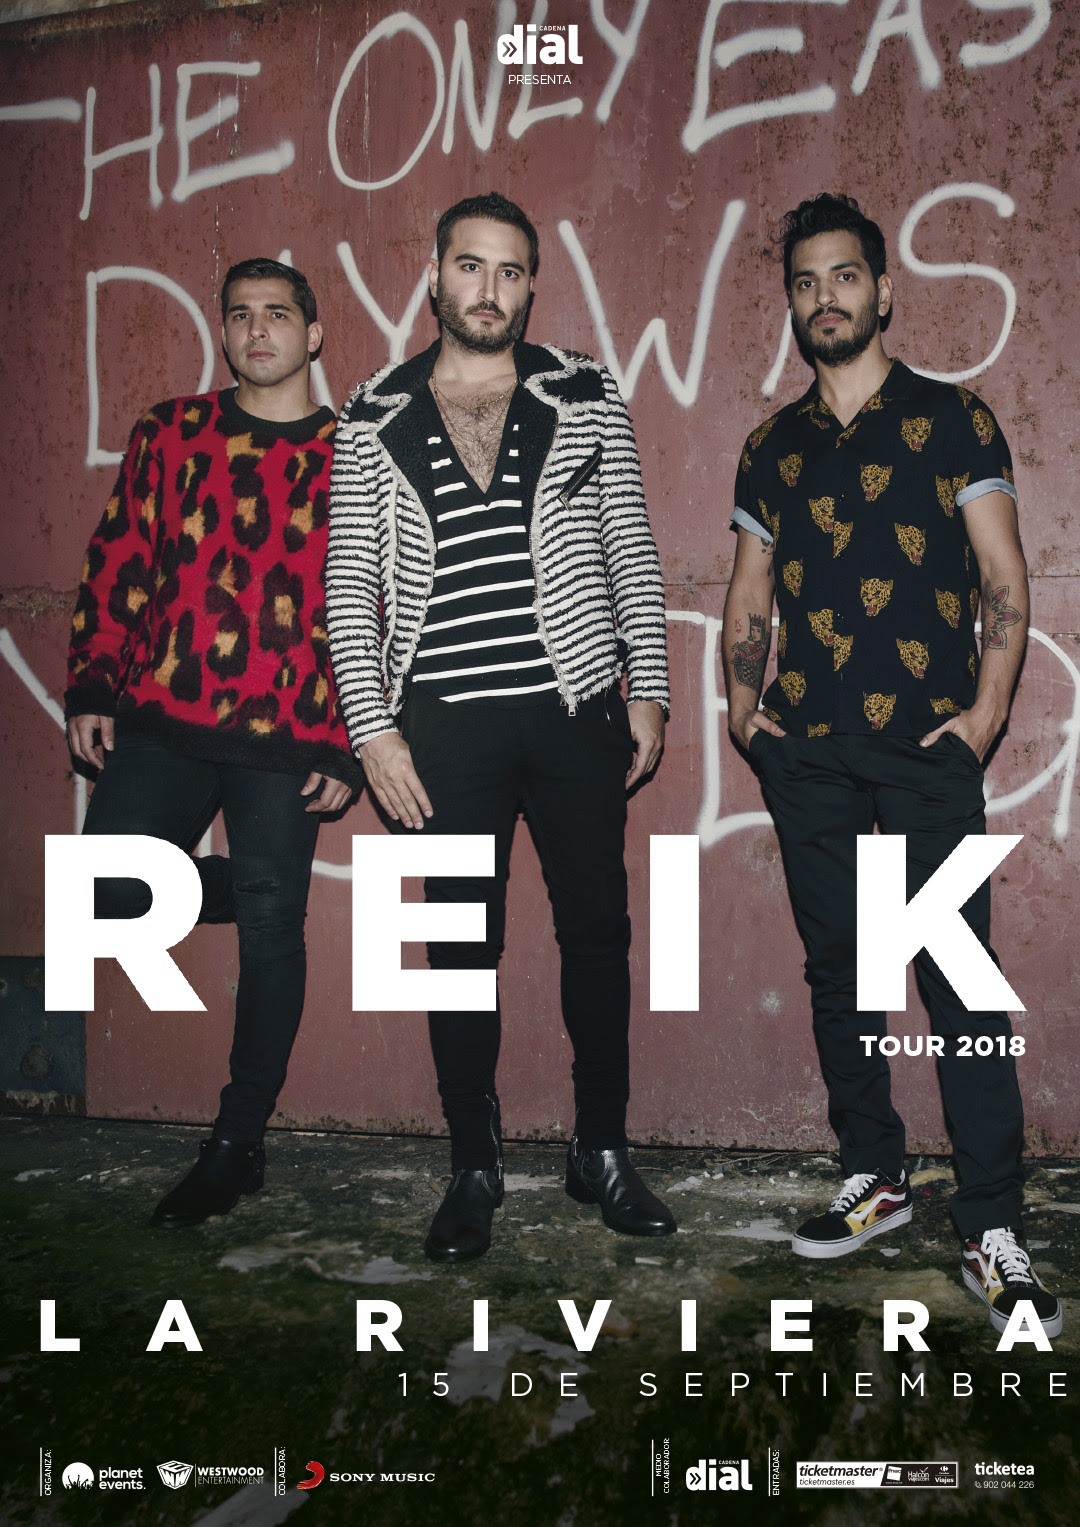 La banda mexicana Reik actuará el 15 de septiembre en Madrid